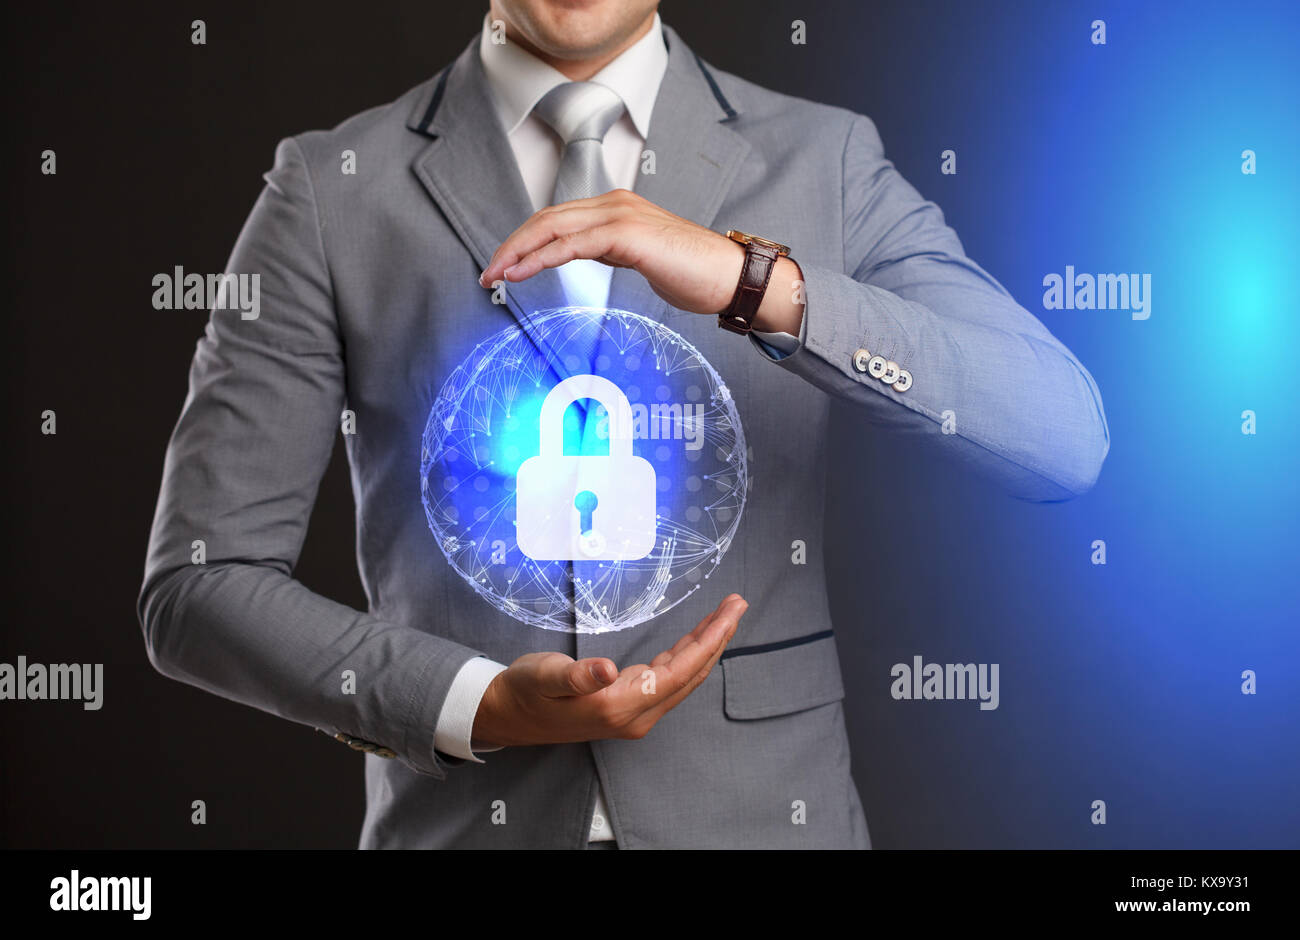 Cyber Security Datenschutz Business Technology Datenschutz Konzept. Geschäftsmann Druck auf den Knopf an der virtuellen Bildschirme Stockfoto